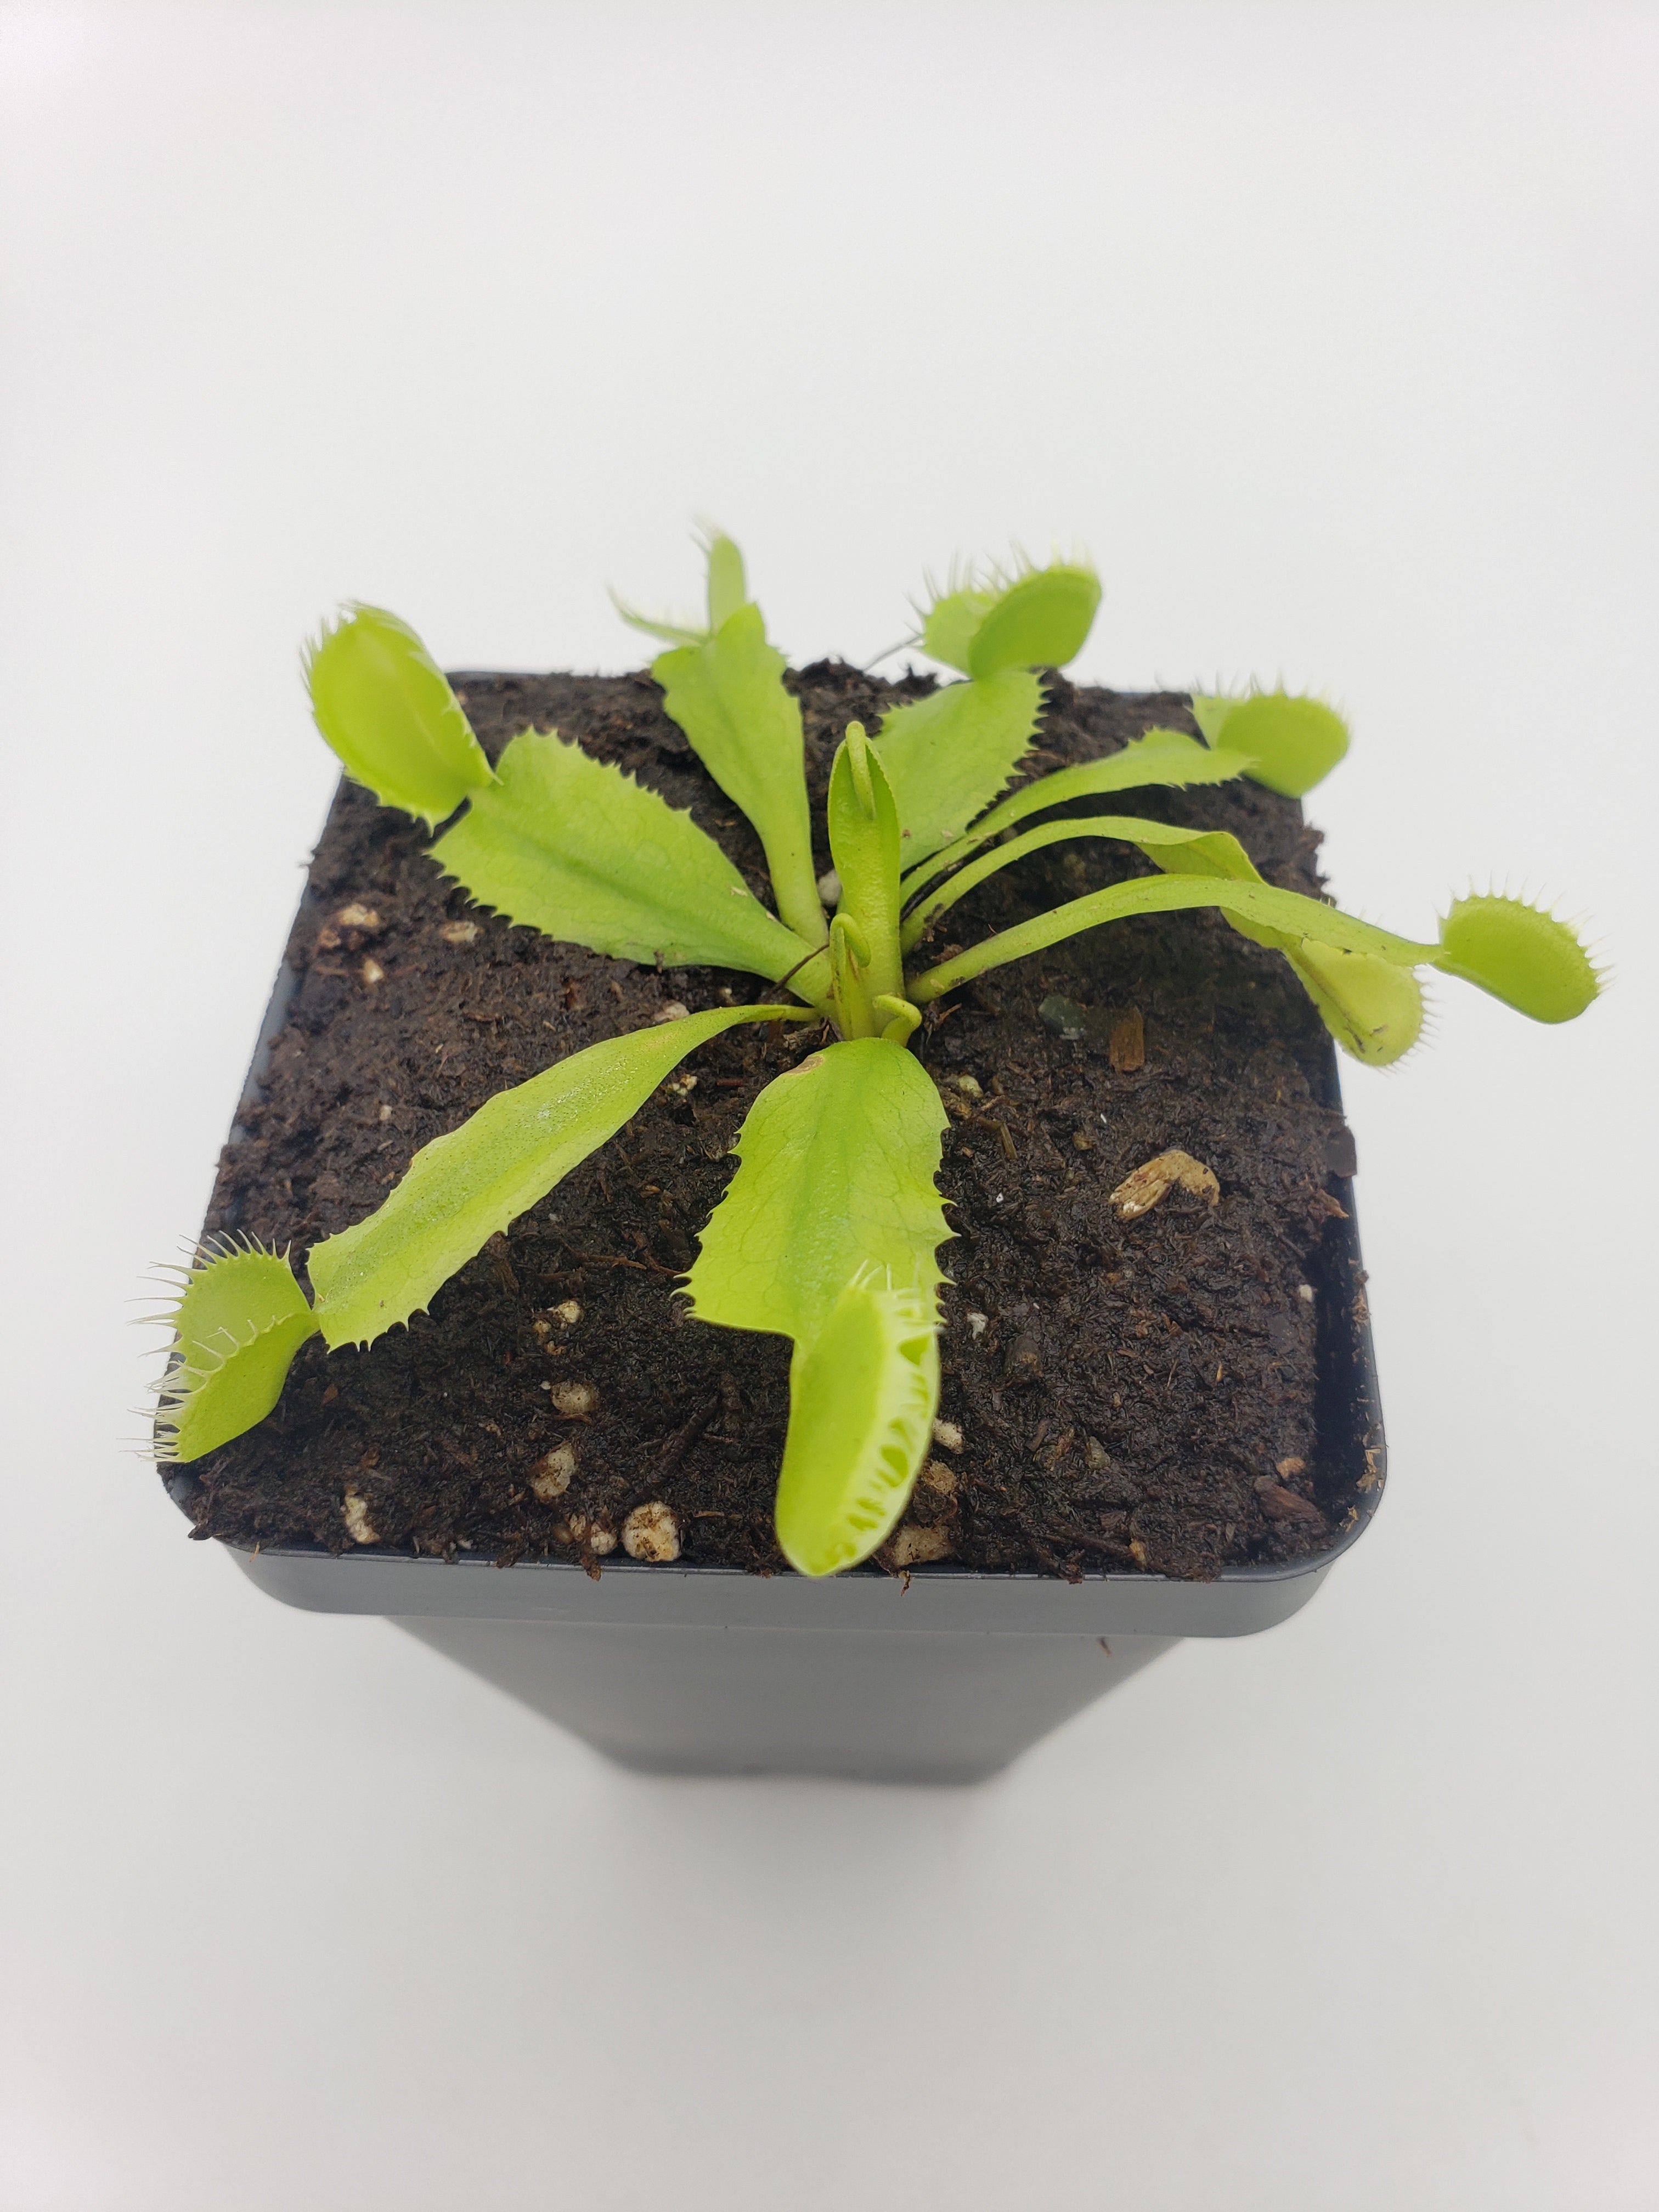 Venus flytrap (Dionaea muscipula) 'Triton' - Rainbow Carnivorous Plants LLC